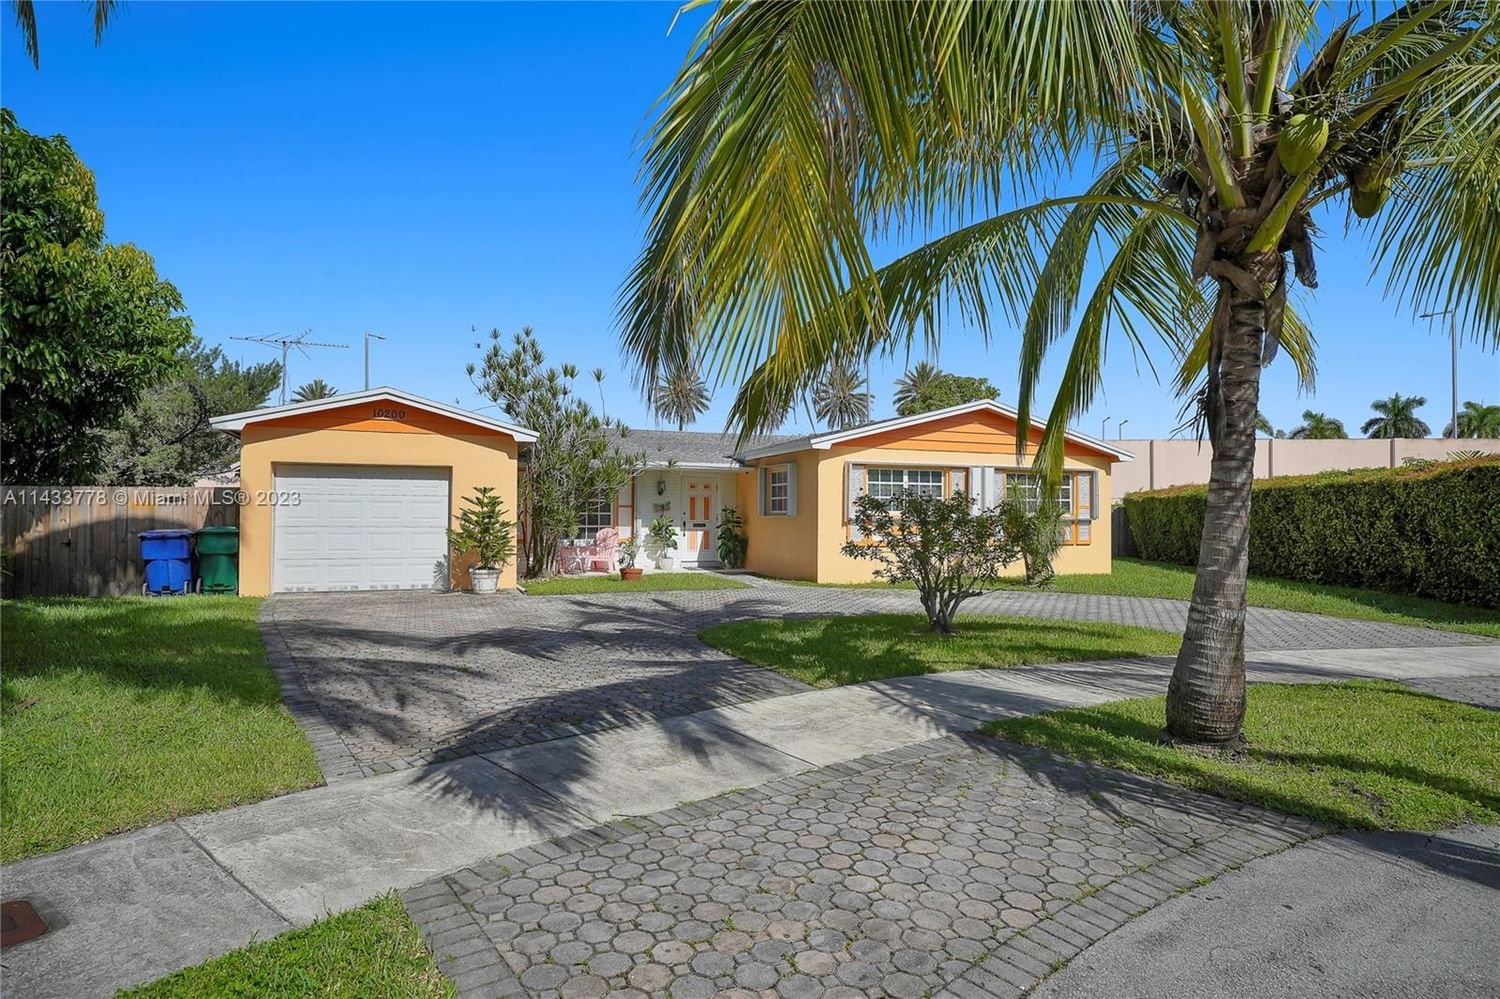 Real estate property located at 10200 103rd Ct, Miami-Dade County, Miami, FL